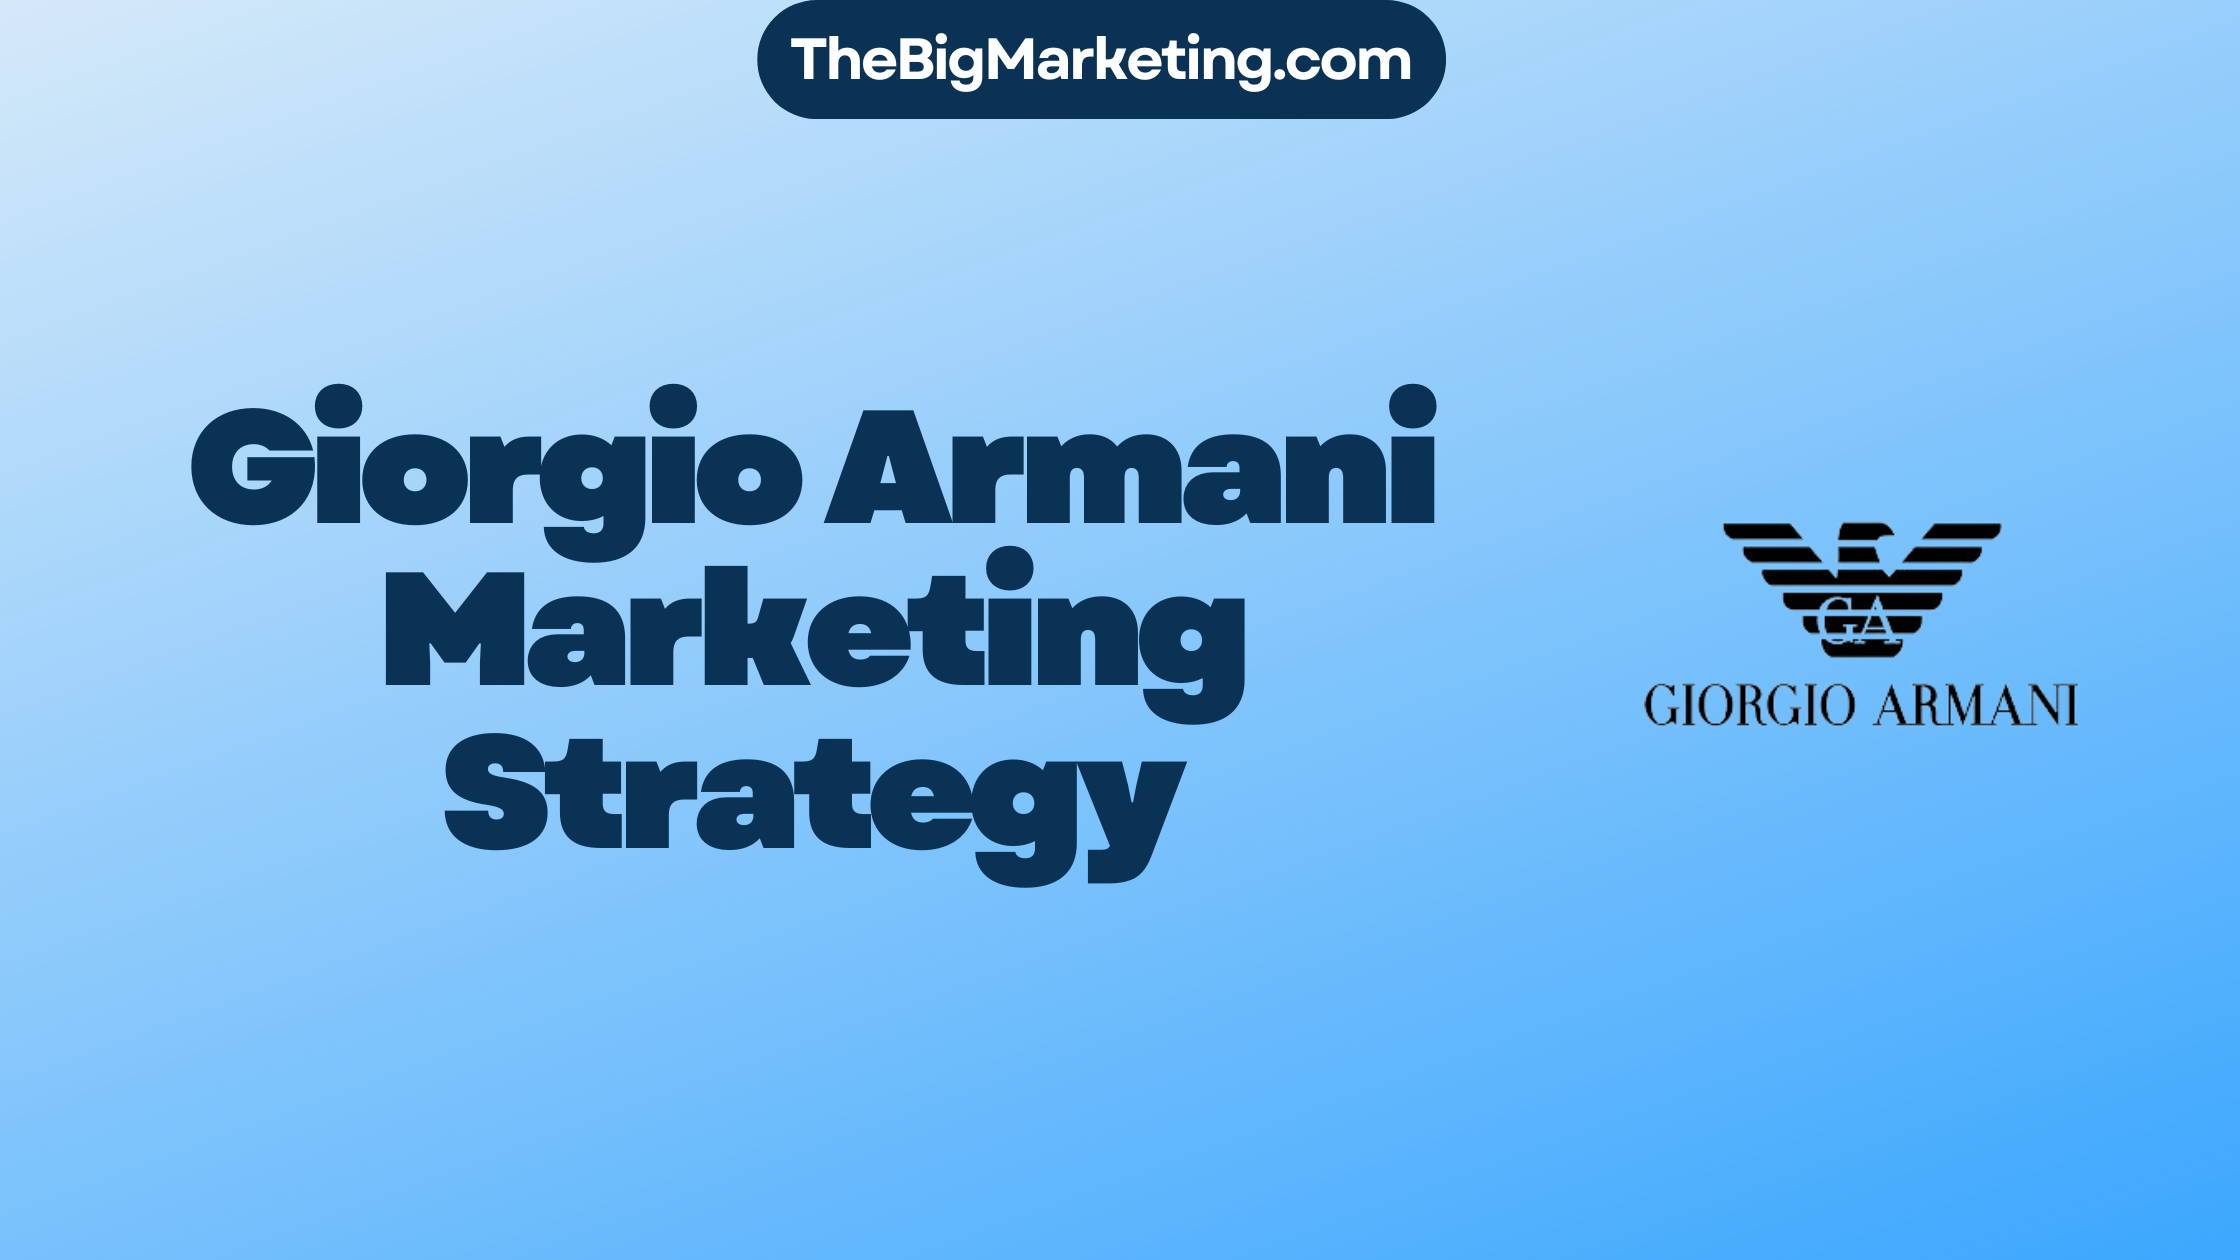 Giorgio Armani Marketing Strategy